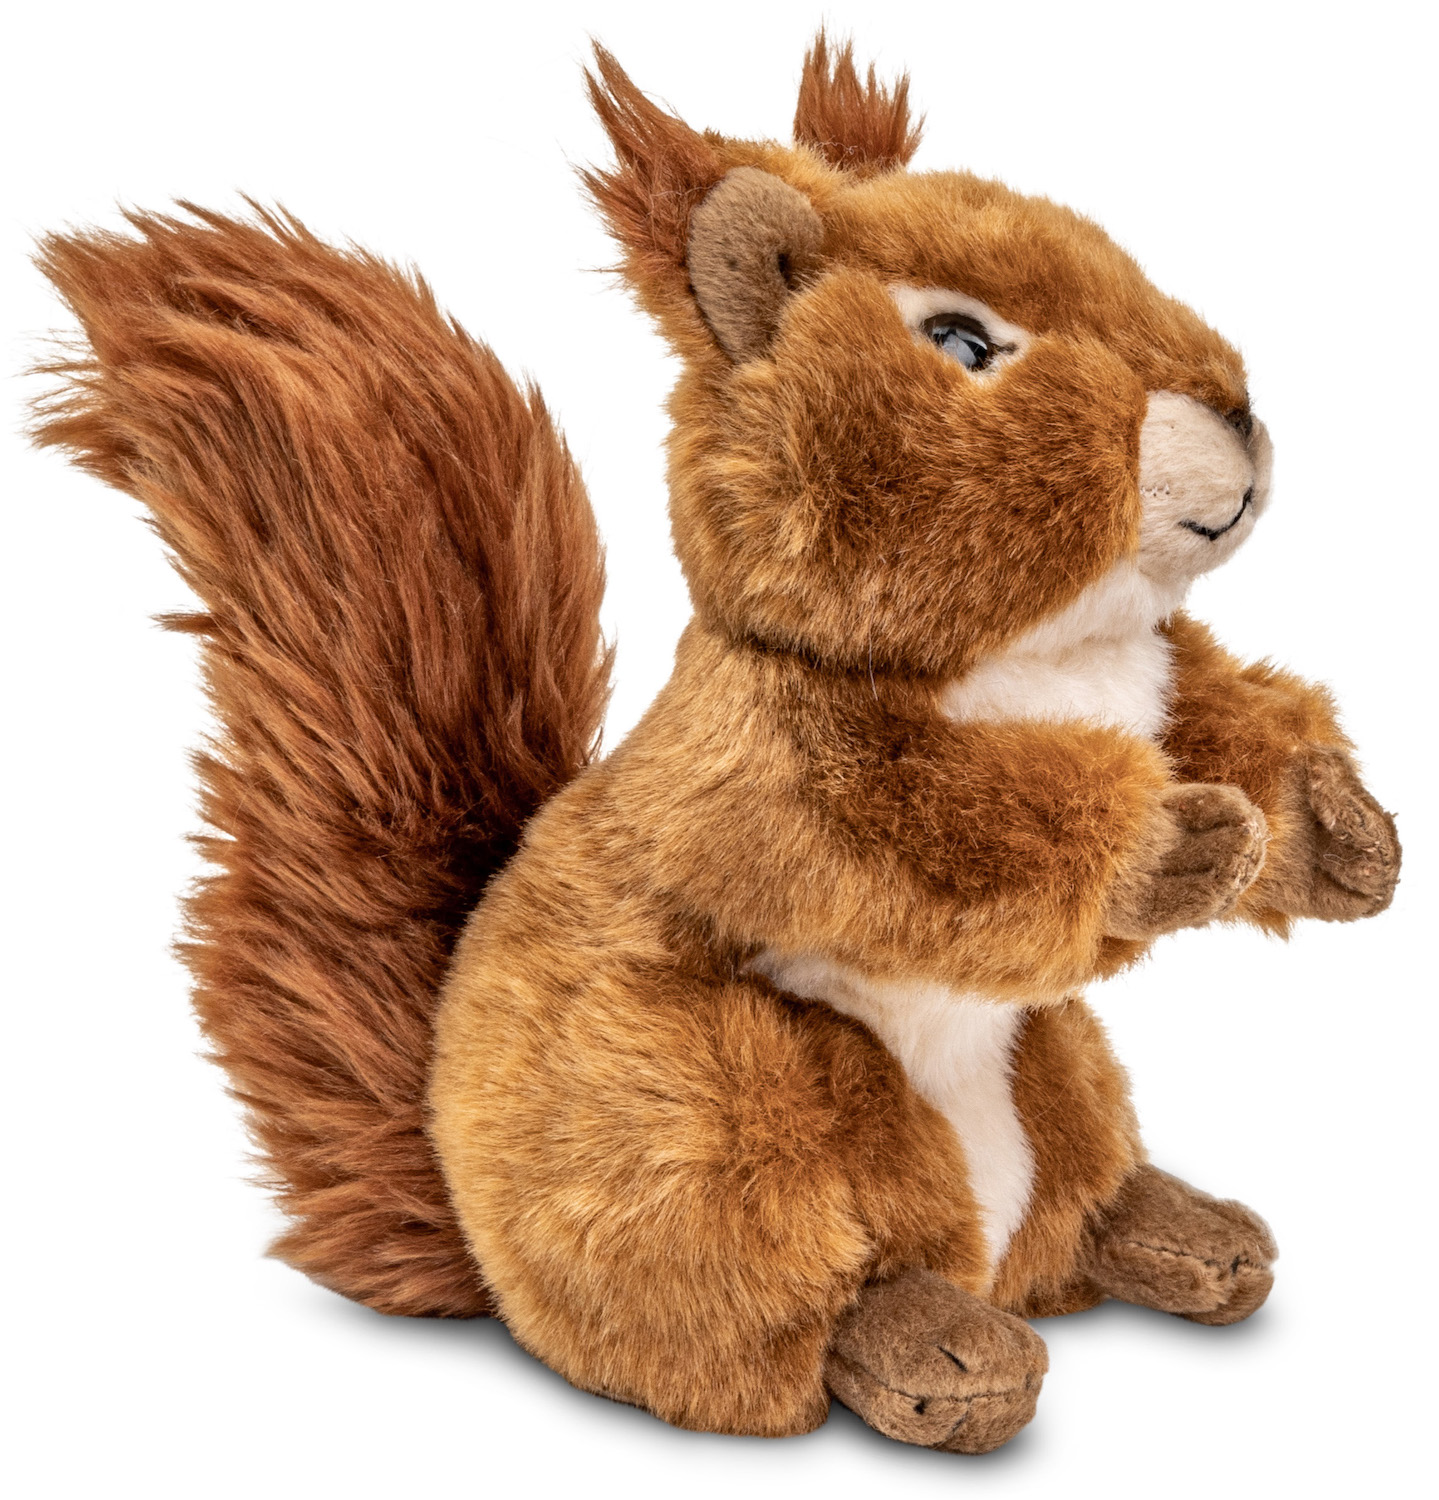 Squirrel, sitting - 17 cm (height)